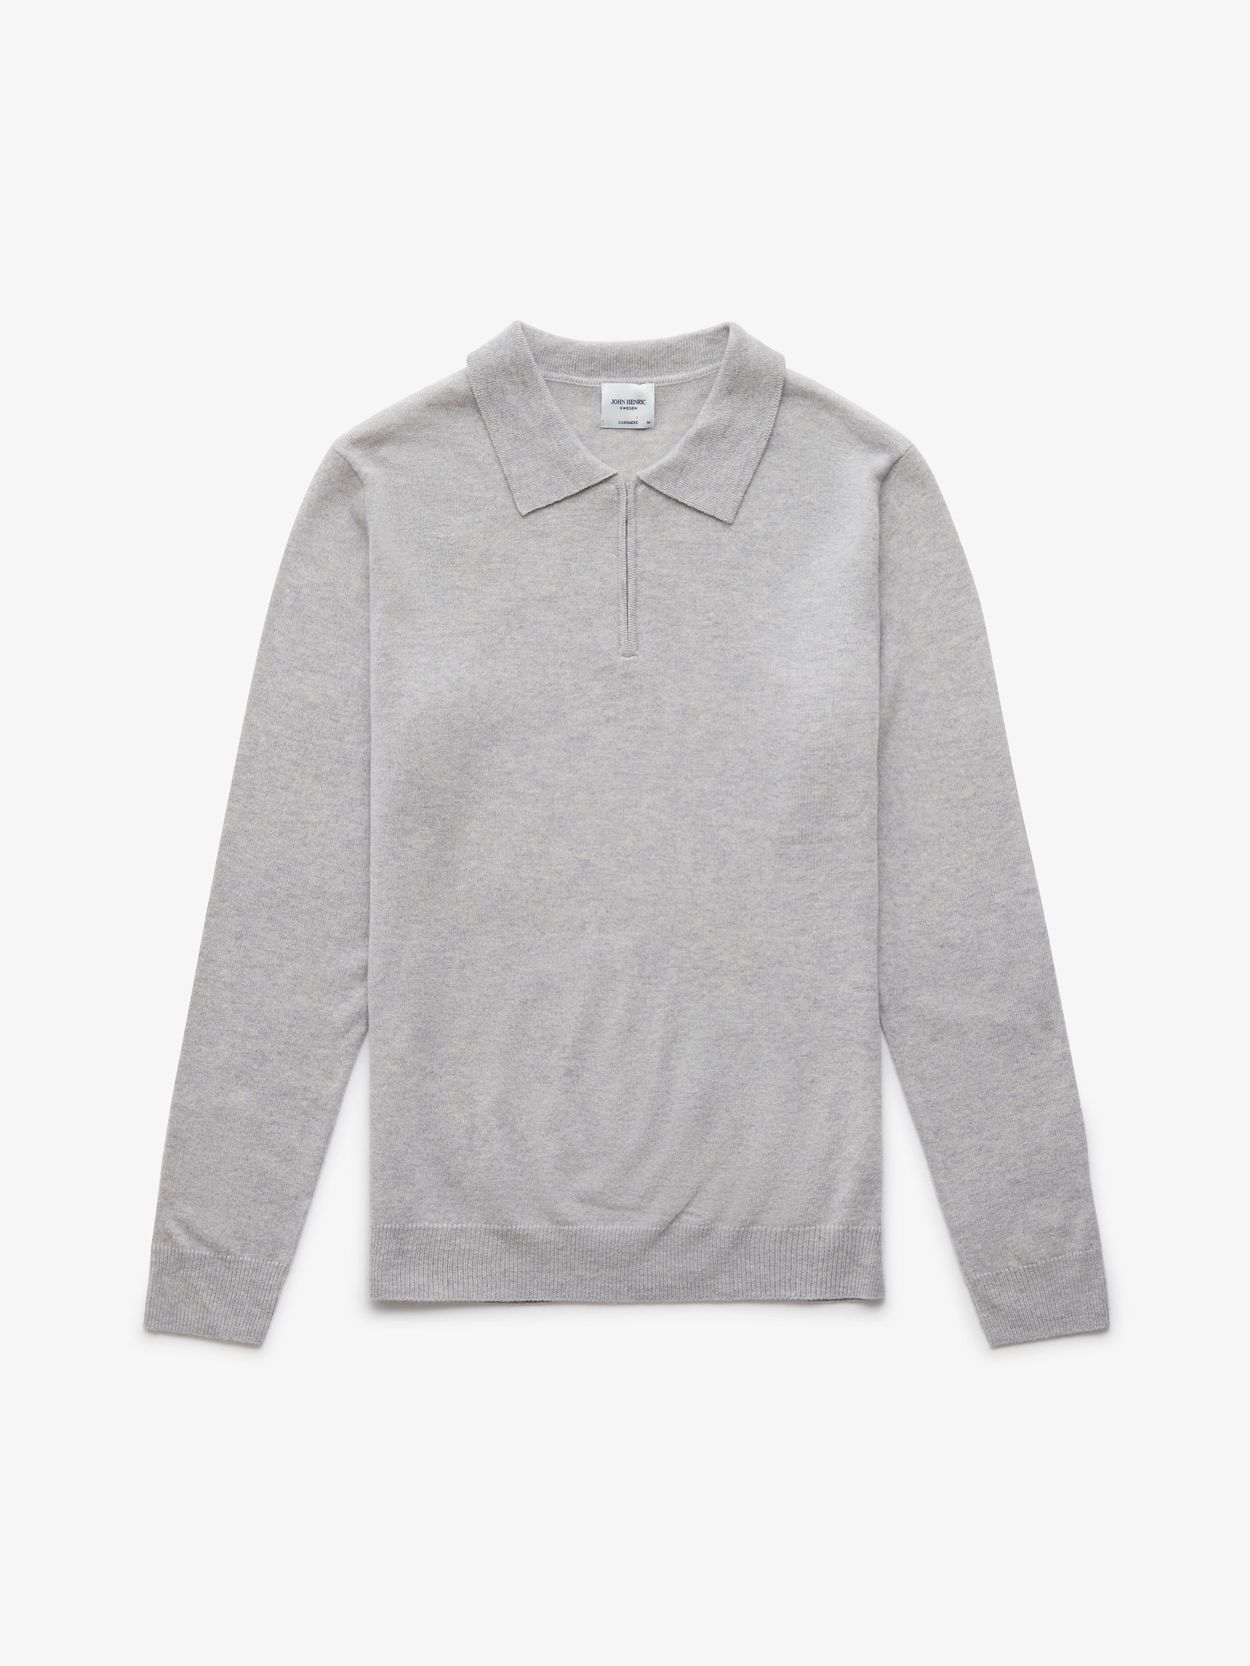 Grey Cashmere Zipper Sweater